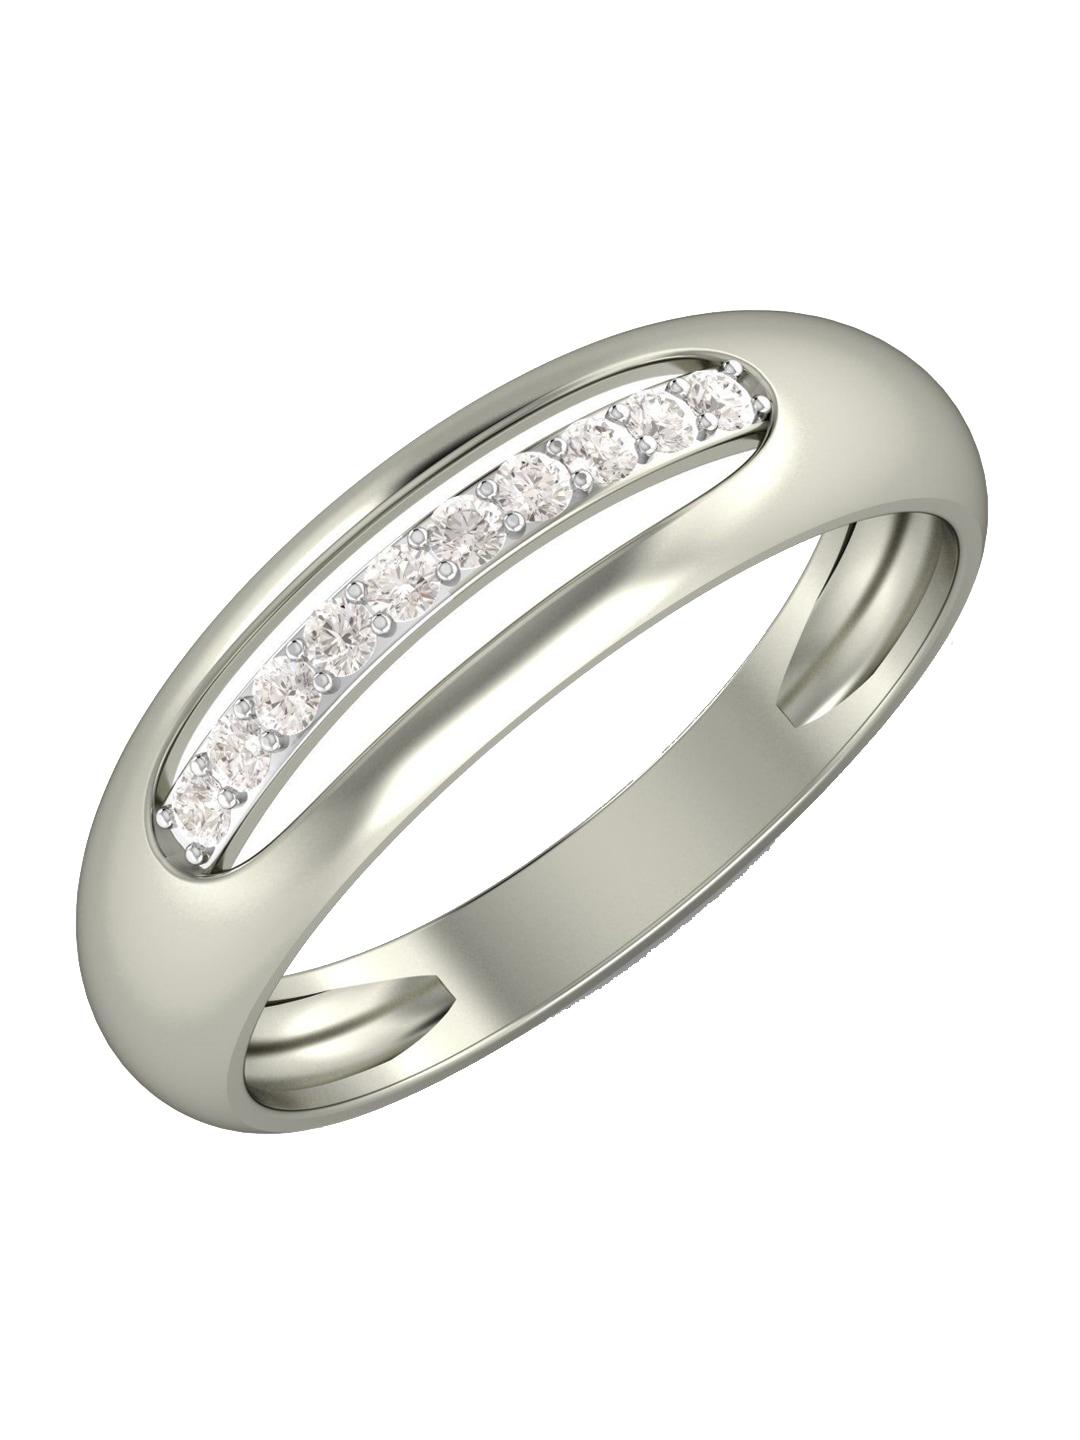 KUBERBOX Elongated Eliteness 18KT Gold Diamond Studded Ring - 2.79 gm